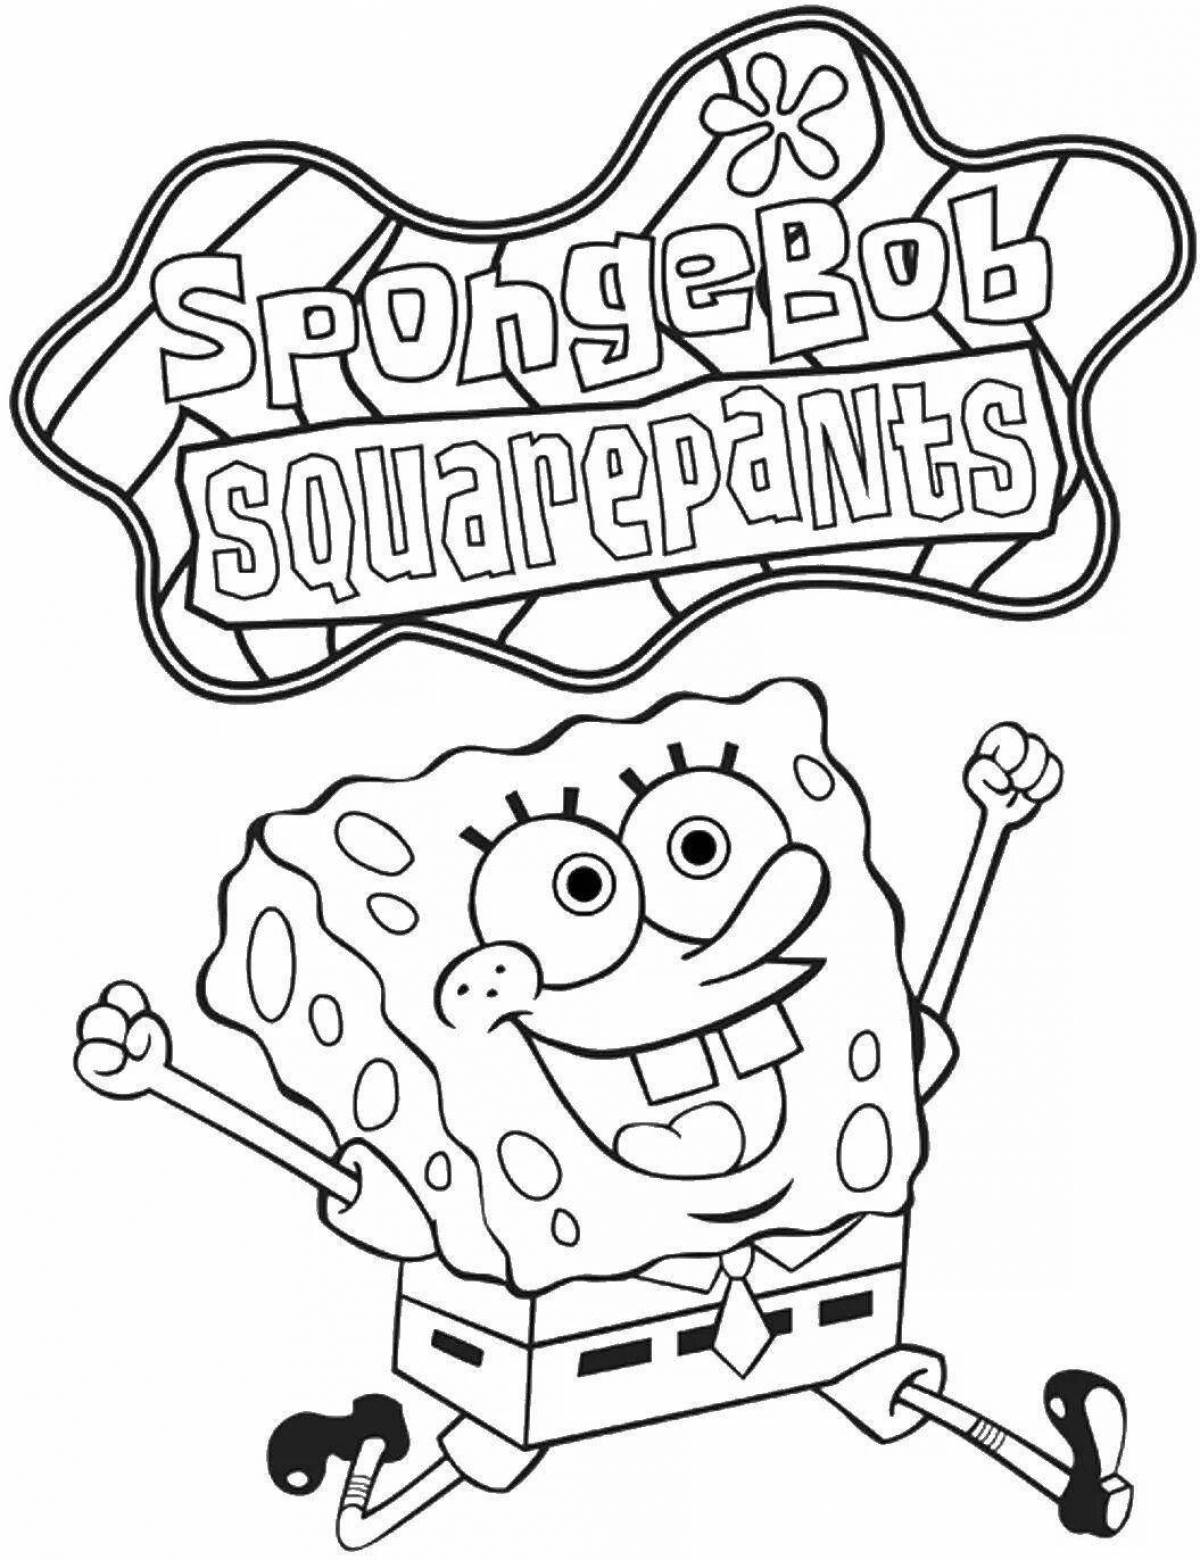 Spongebob amazing coloring book